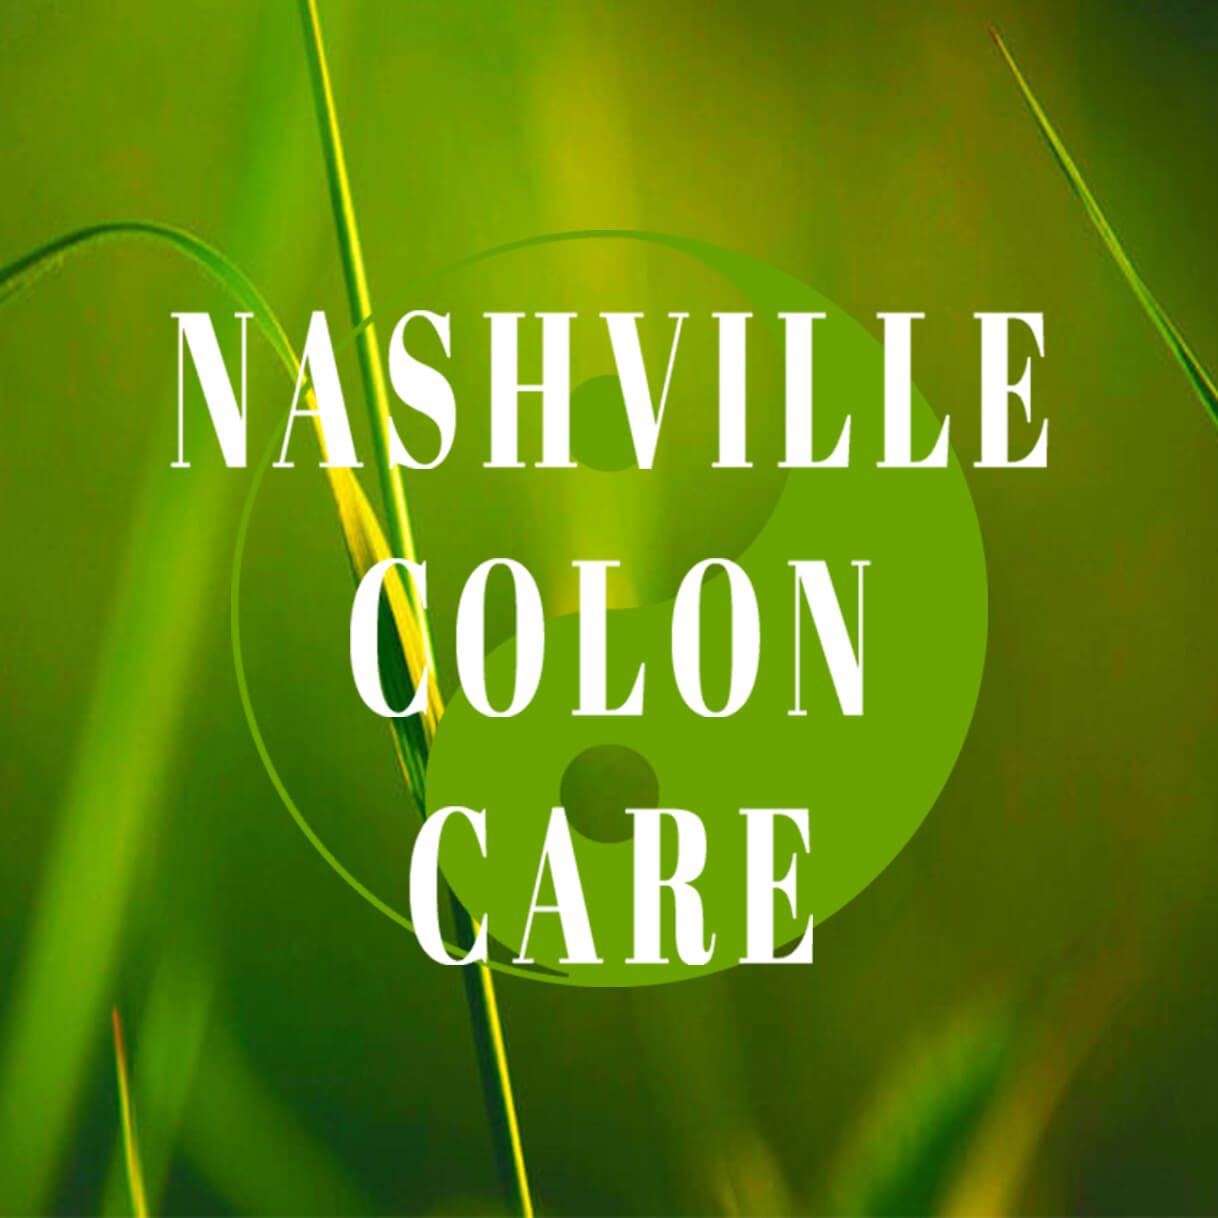 Nashville Colon Care. Wellville Nashville Landing Page Logo